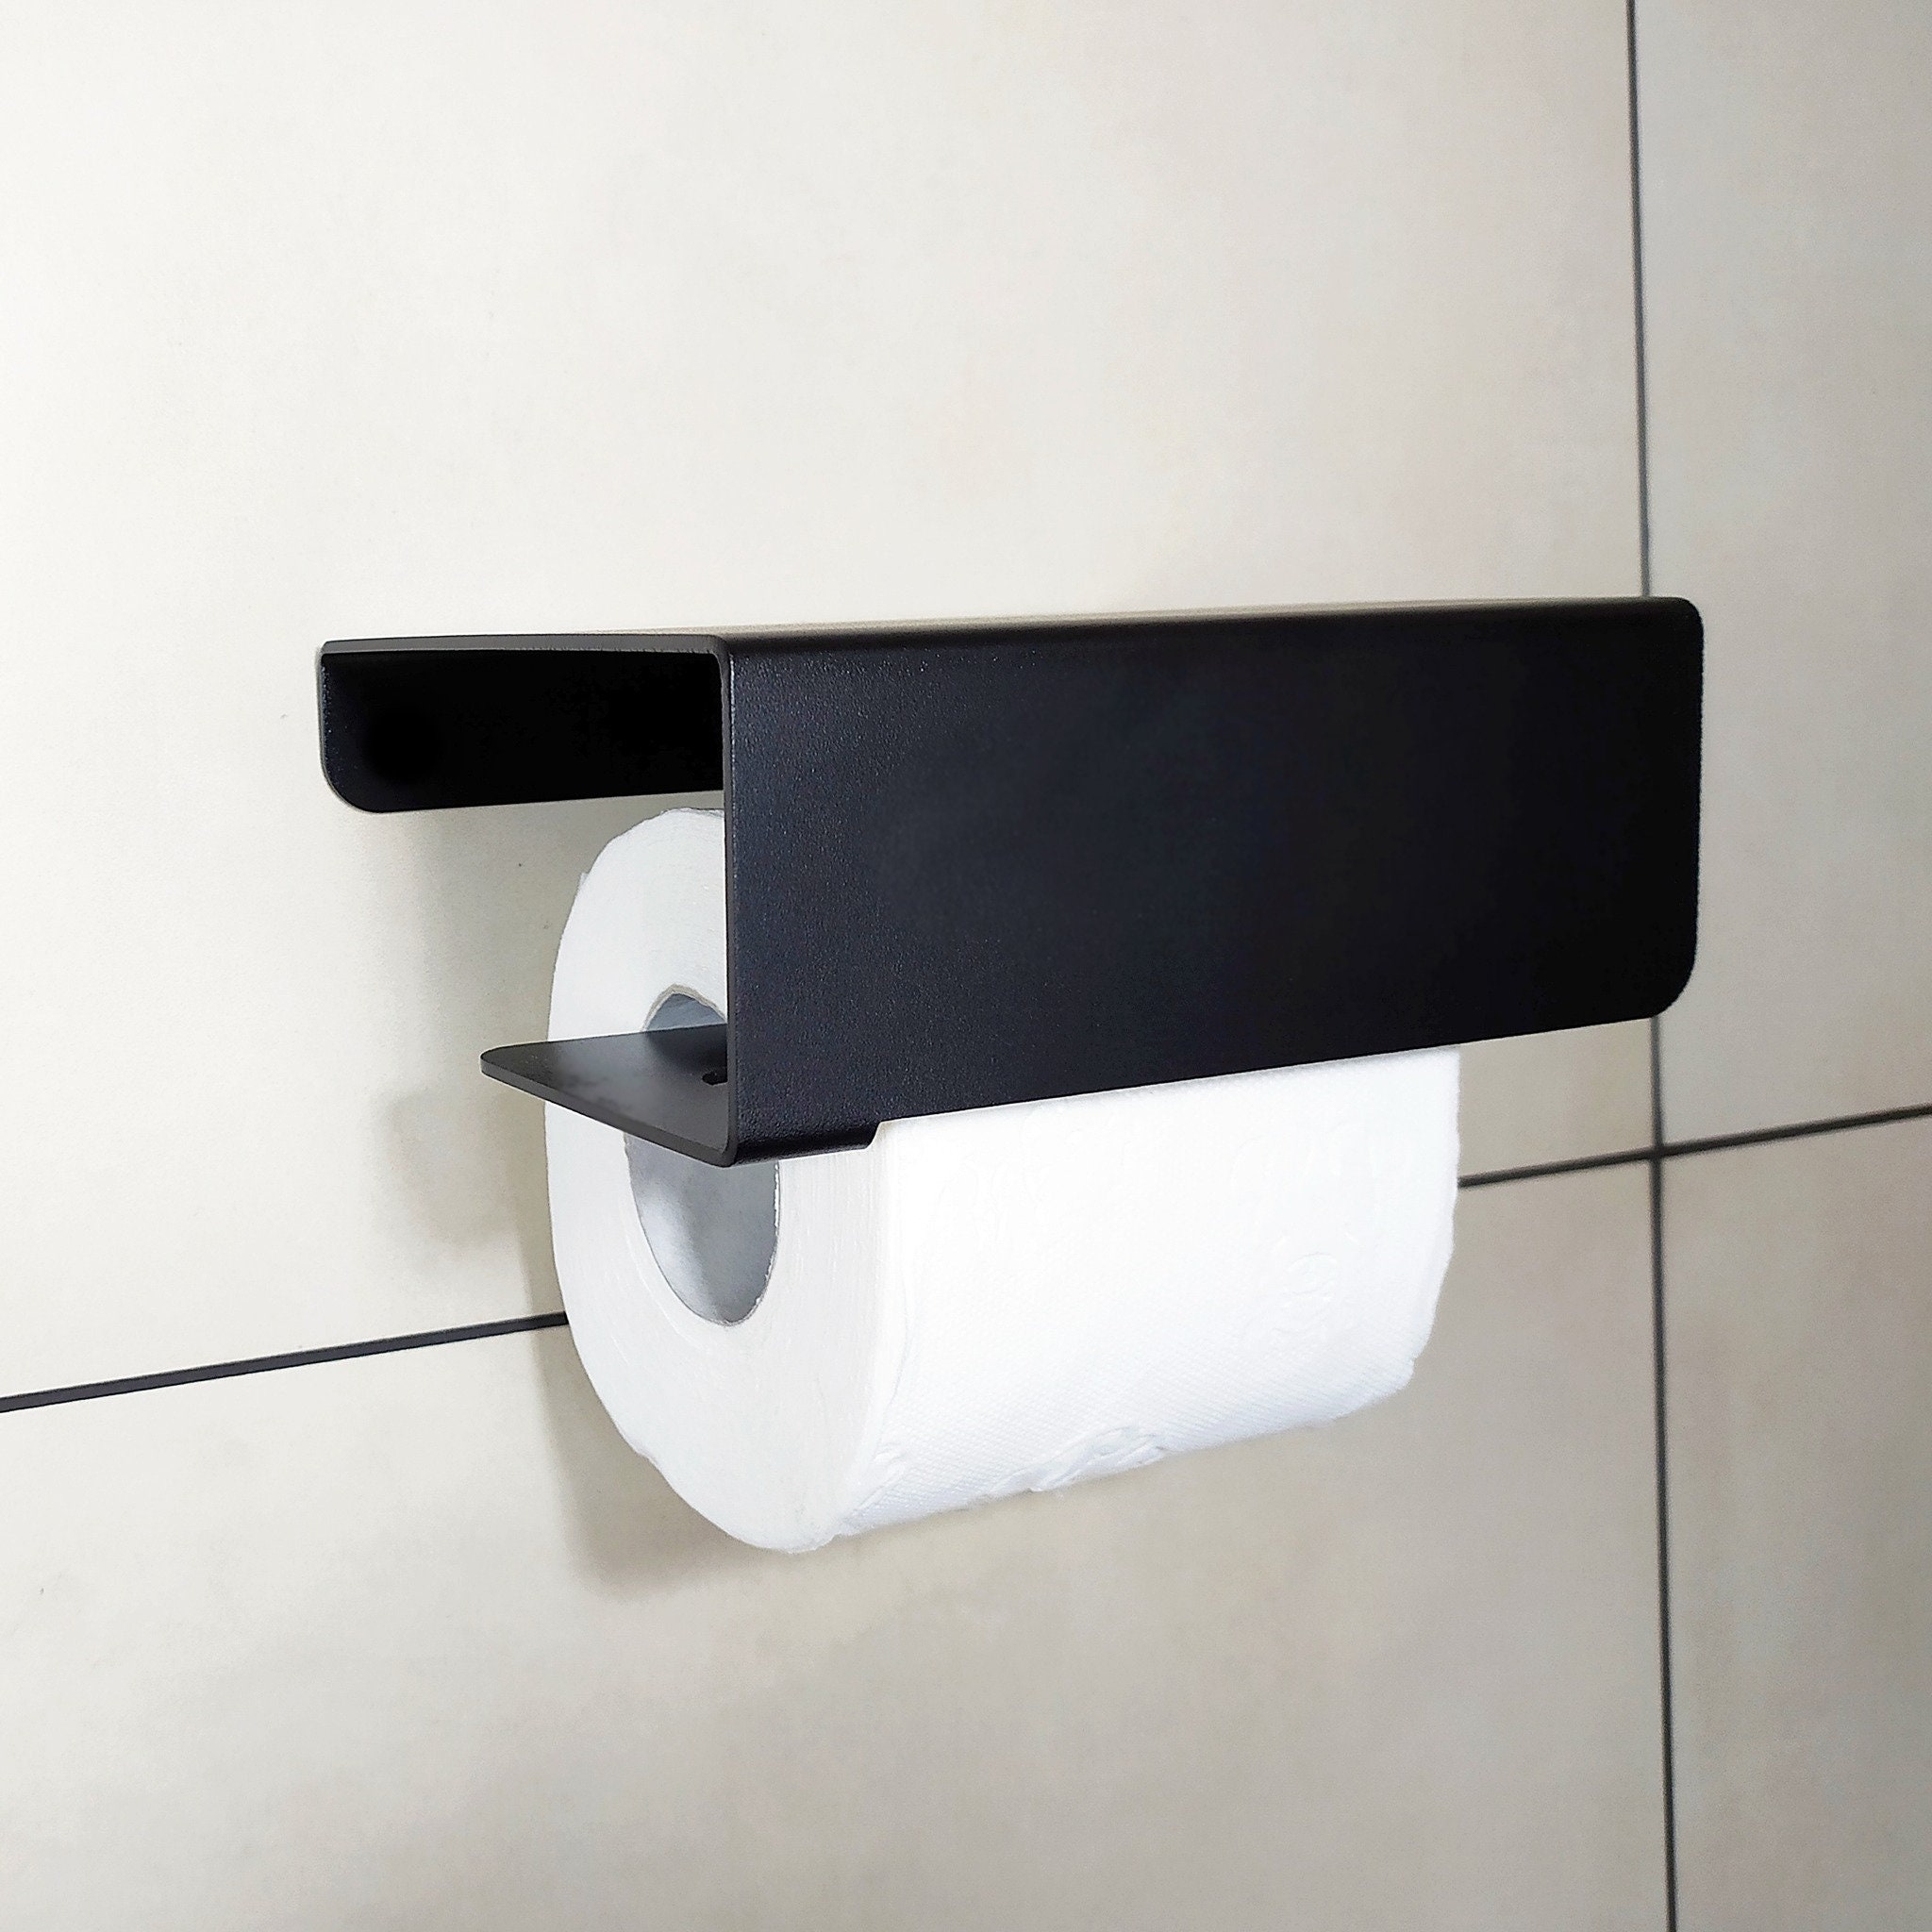 Black Toilet Roll Holder N2, Toilet Paper Holder With Phone Shelf, Steel,  Minimalist Bathroom Accessories, N-line Design 